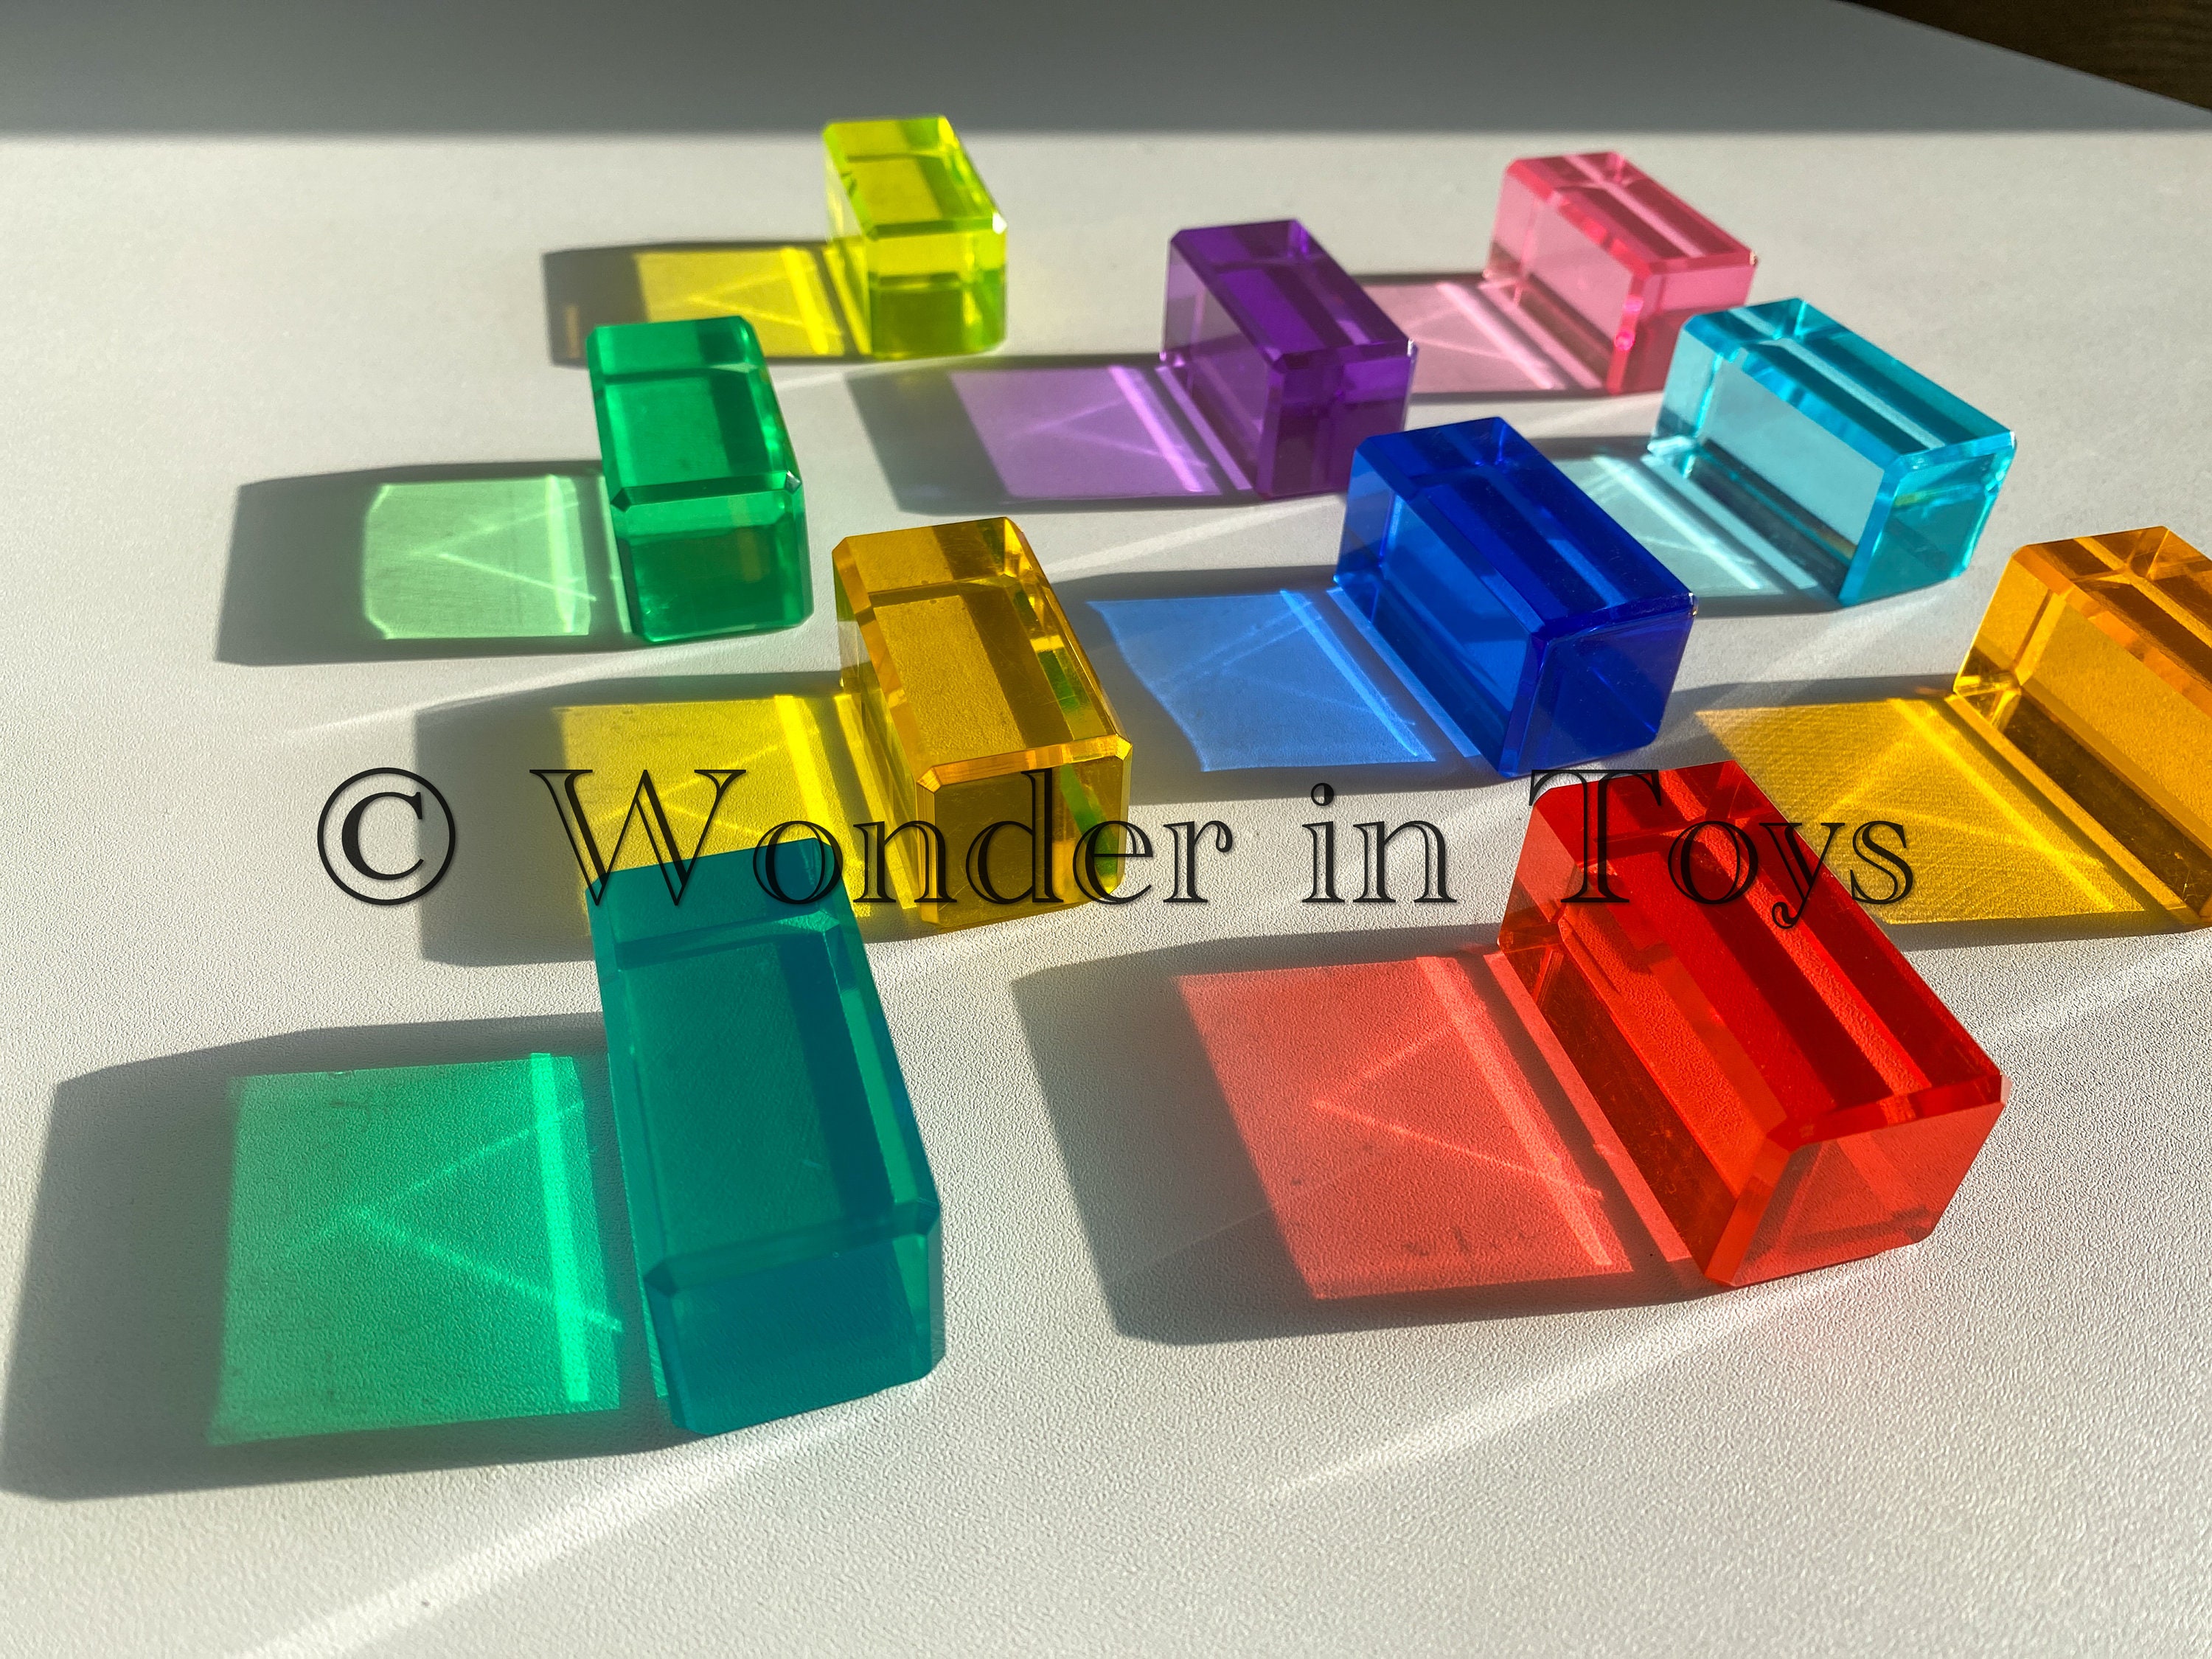 Translucent Pastel Light Rainbow Acrylic Square and Rectangle Cube Set –  Wonder in Toys & Urban Littles